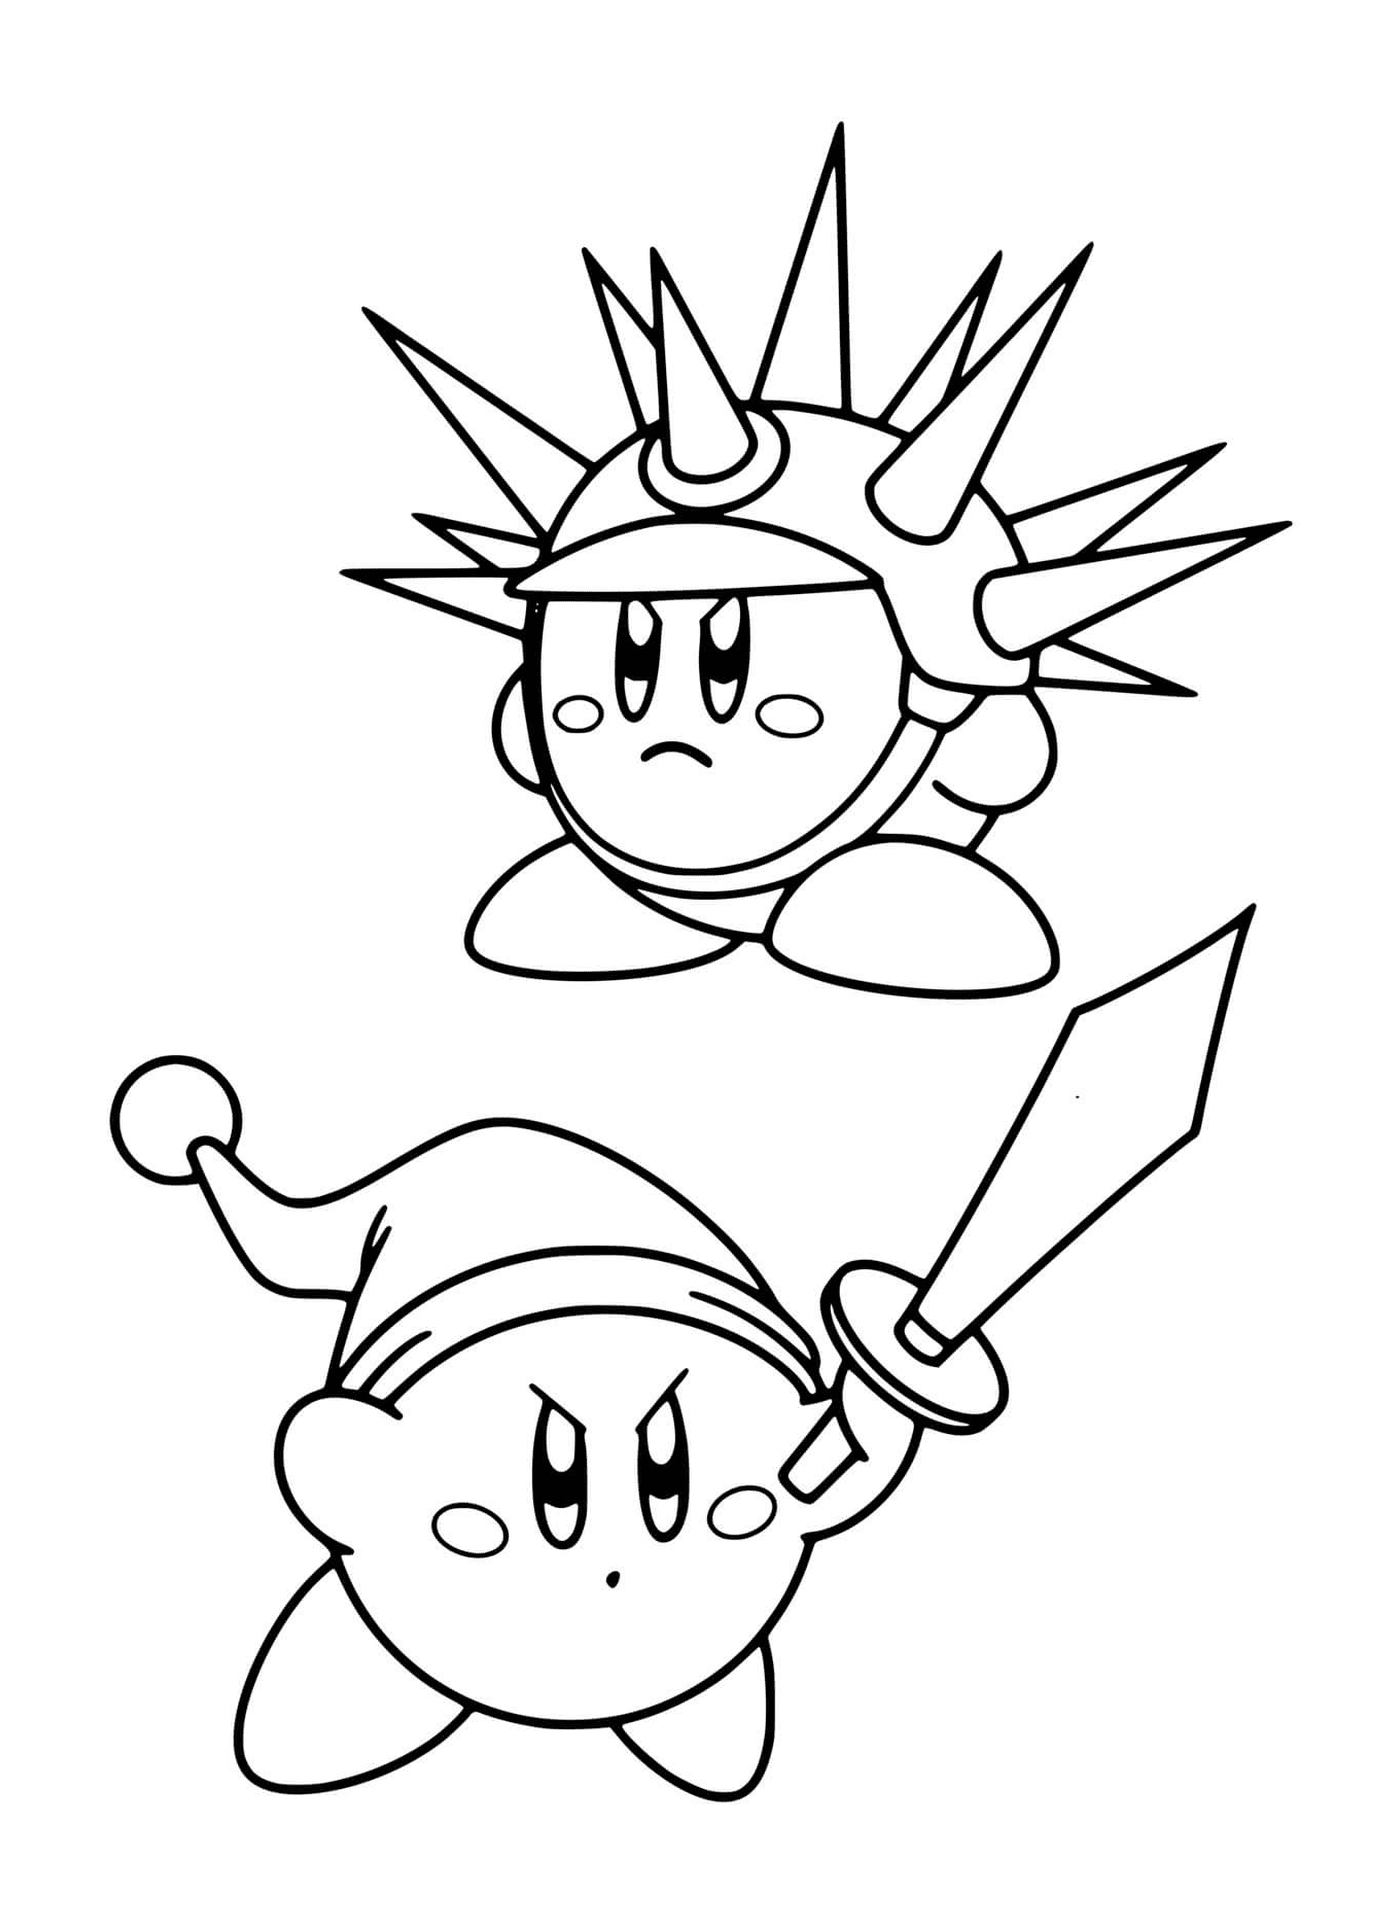  Два персонажа из Kirby Fighters 2 